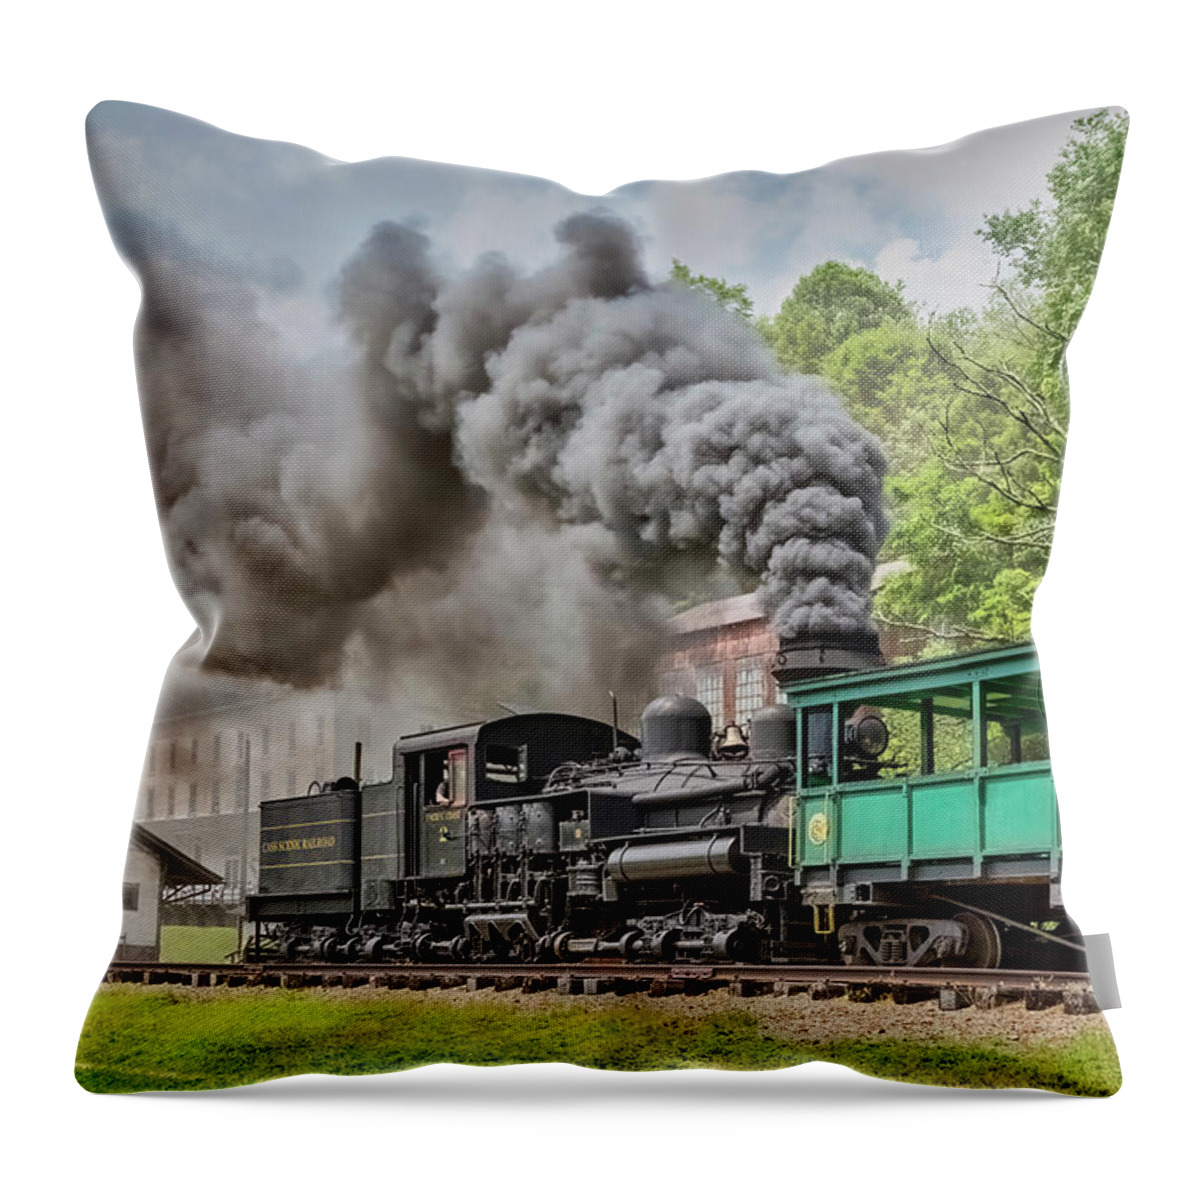 Cass Scenic Railroad State Park Throw Pillow featuring the photograph Cass Scenic Railroad by Jurgen Lorenzen